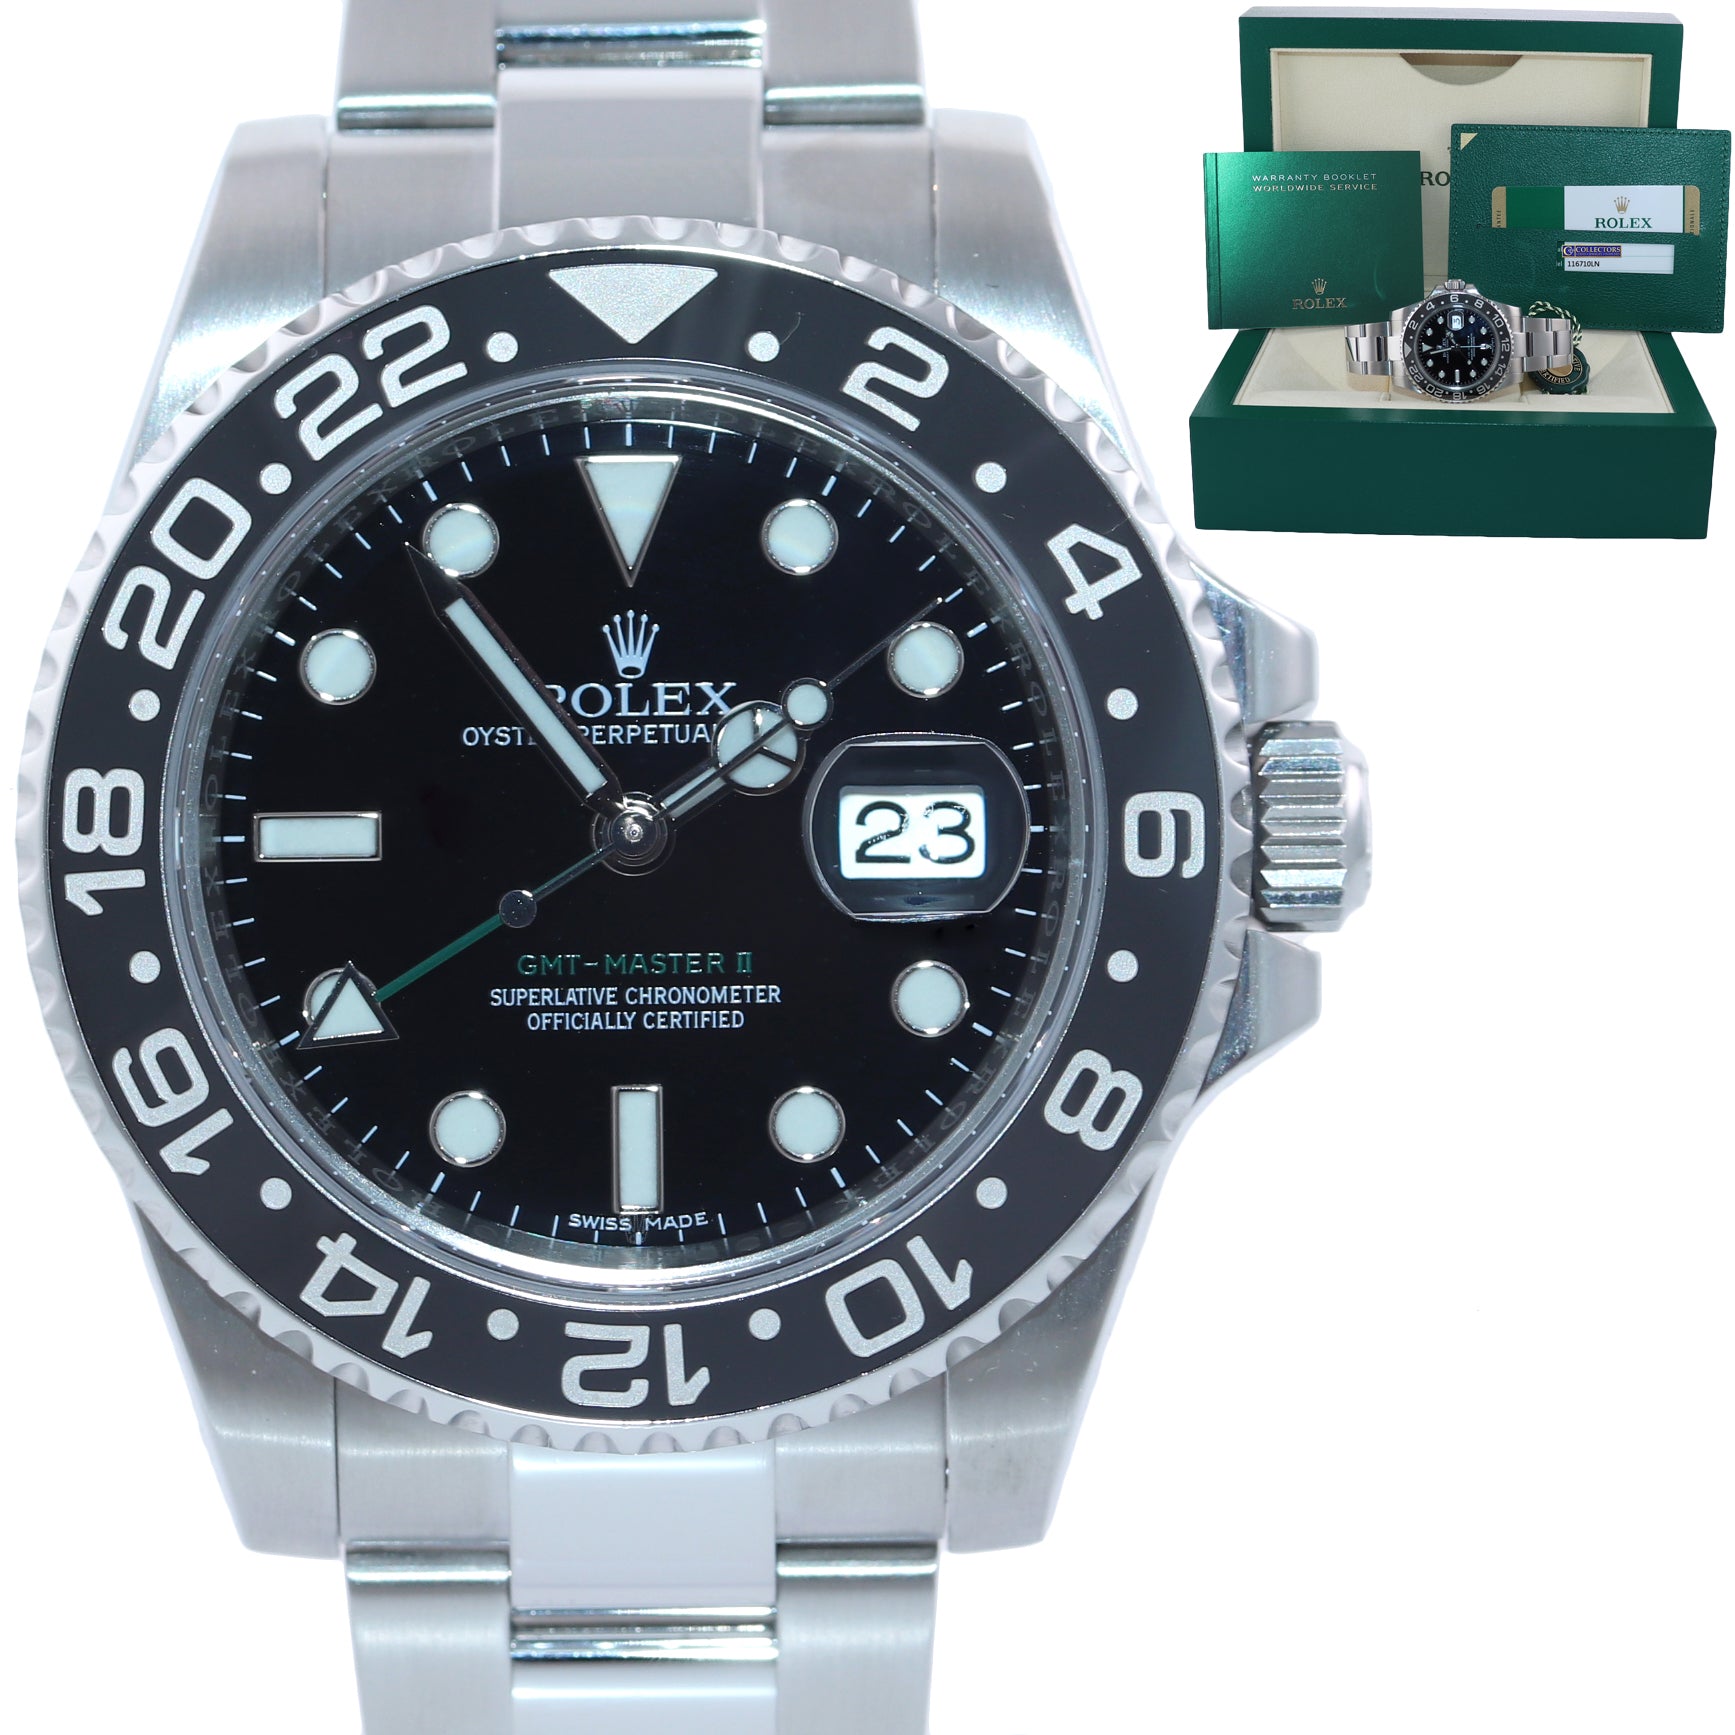 2017 PAPERS Rolex GMT Master II 116710LN Steel Ceramic Black Ceramic Watch